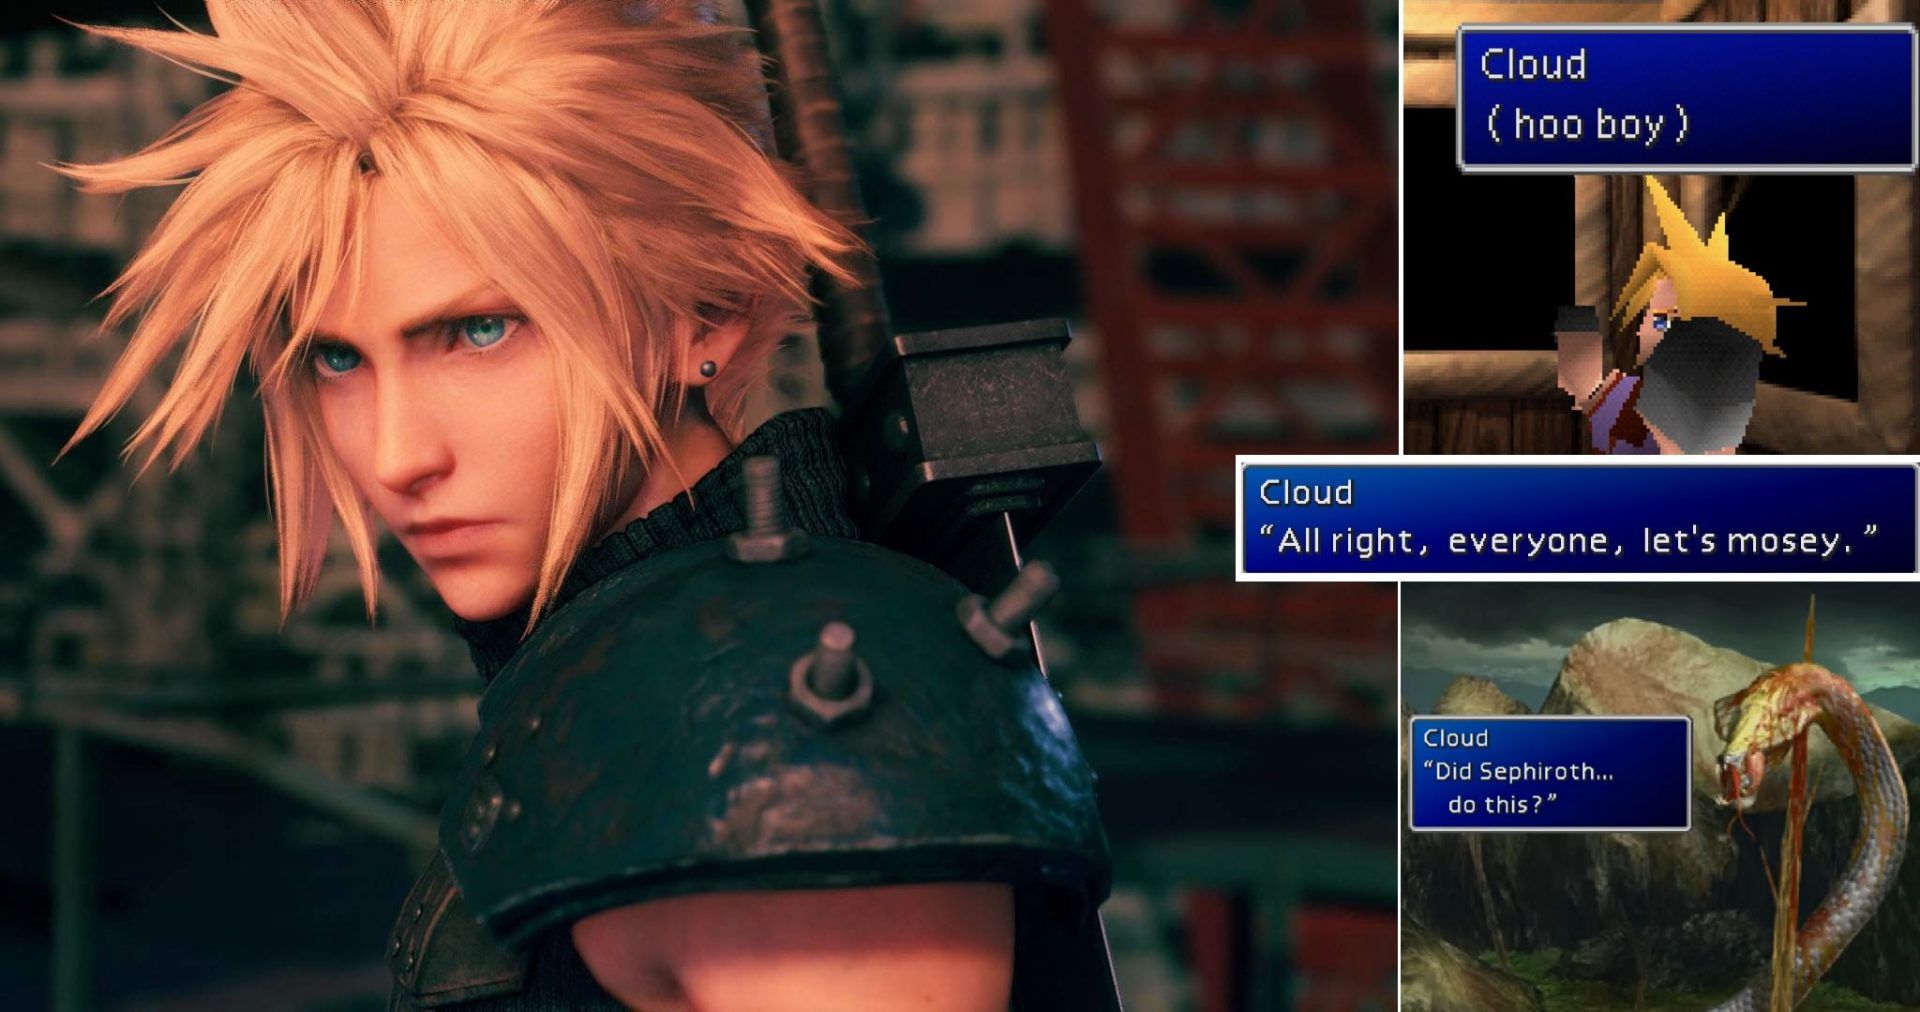 Cloud Final Fantasy 7 quotes